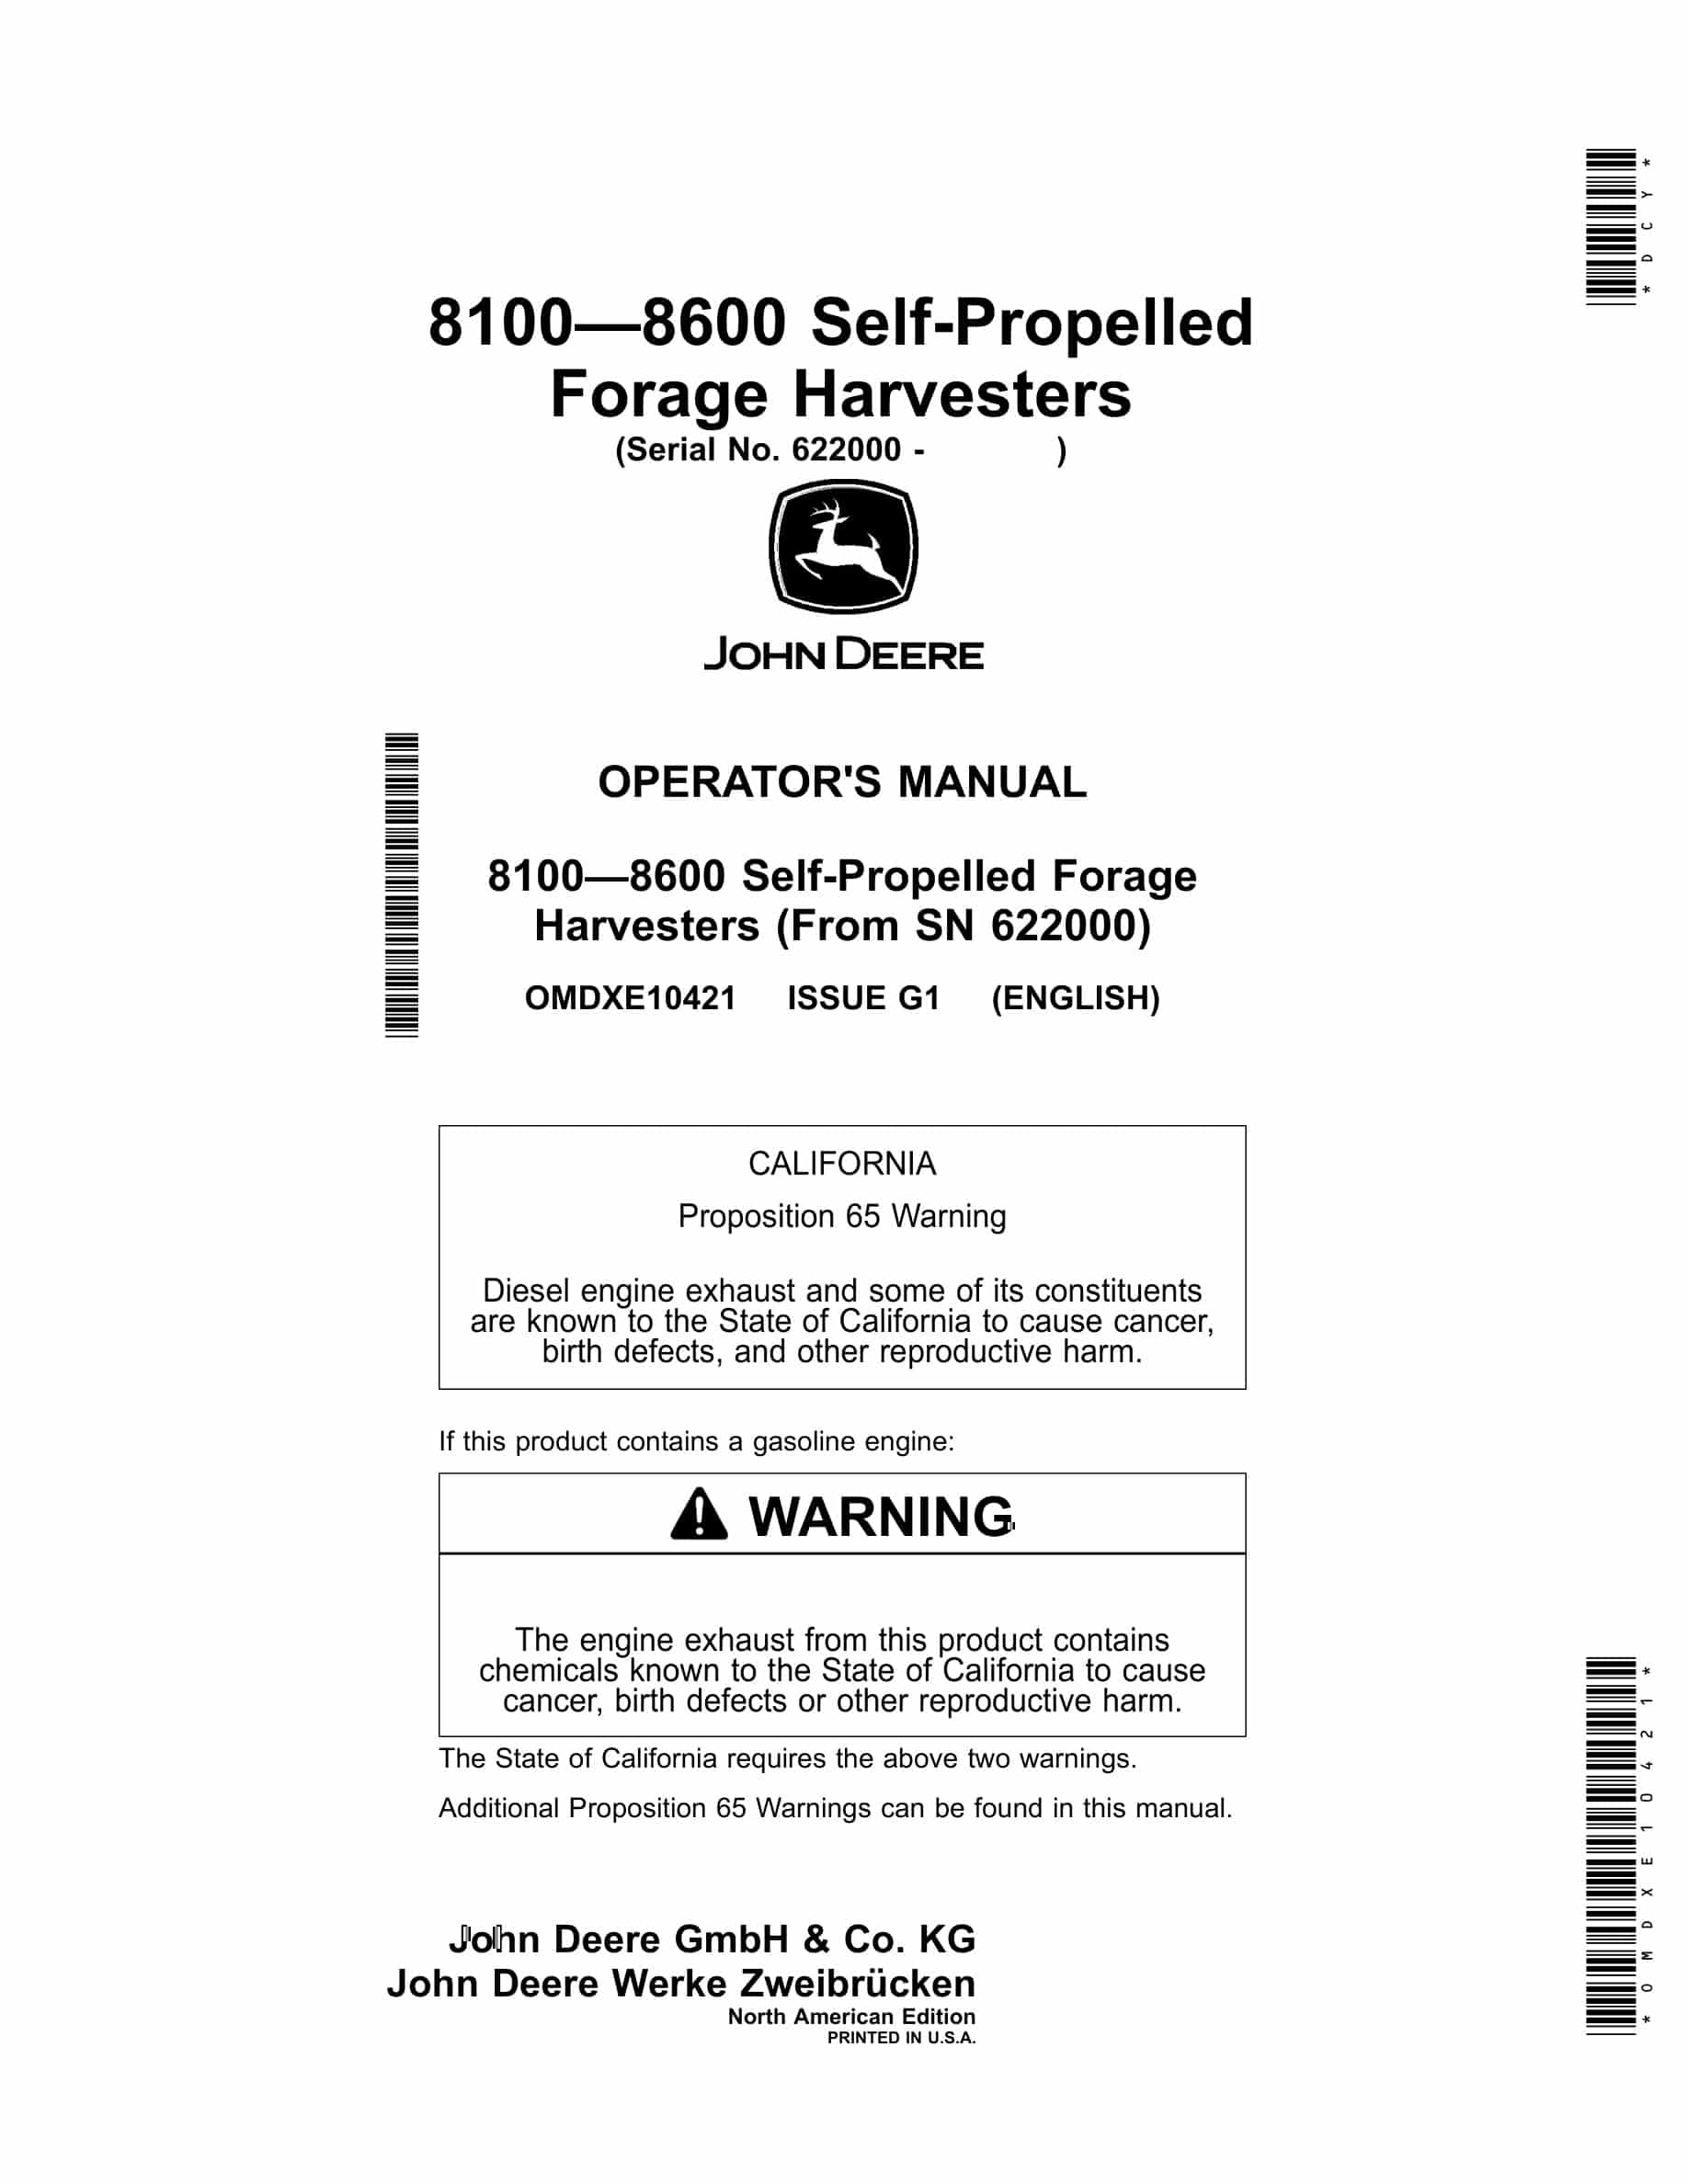 John Deere 8100 – 8600 Self-Propelled Forage Harvester Operator Manual OMDXE10421-1